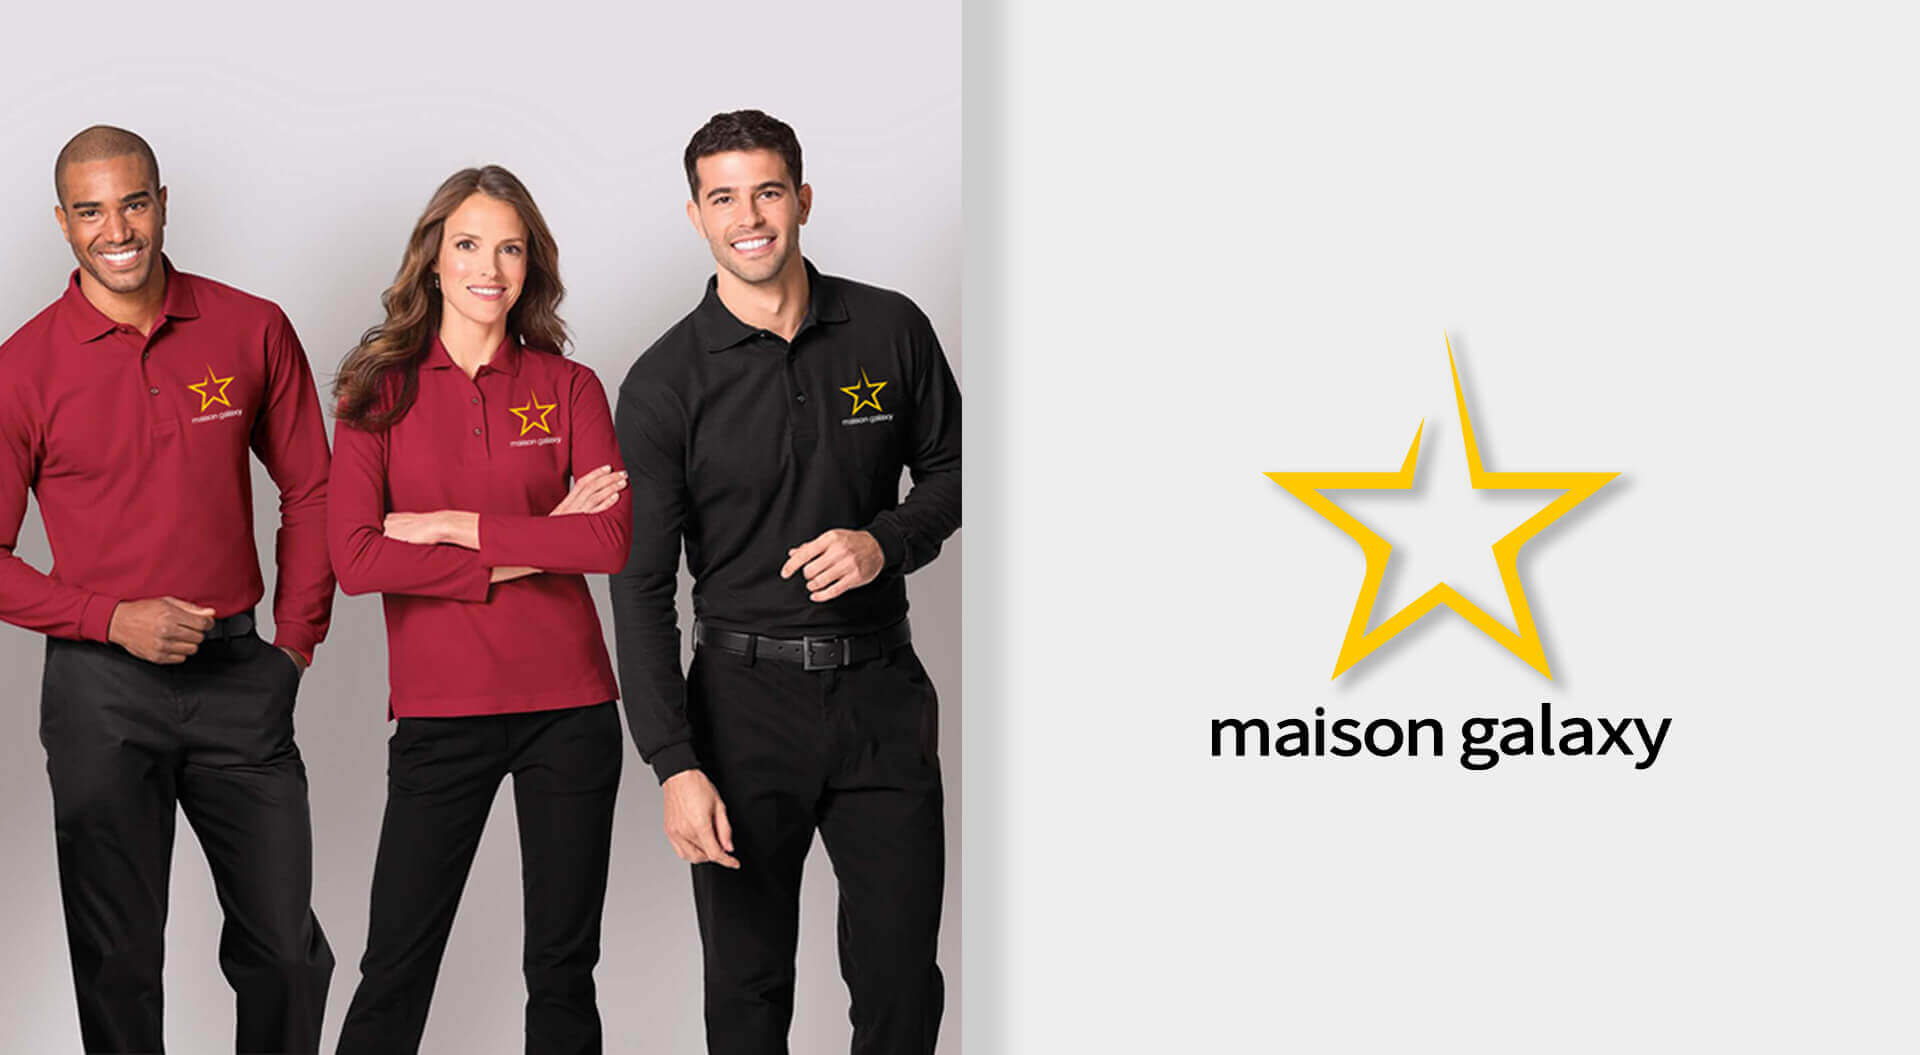 Maison Galaxy, Staff Uniforms Branding, Variety (convenience) Stores, Supermarket, General Retail, Graphic Communications, Brand Identity - CampbellRigg Agency